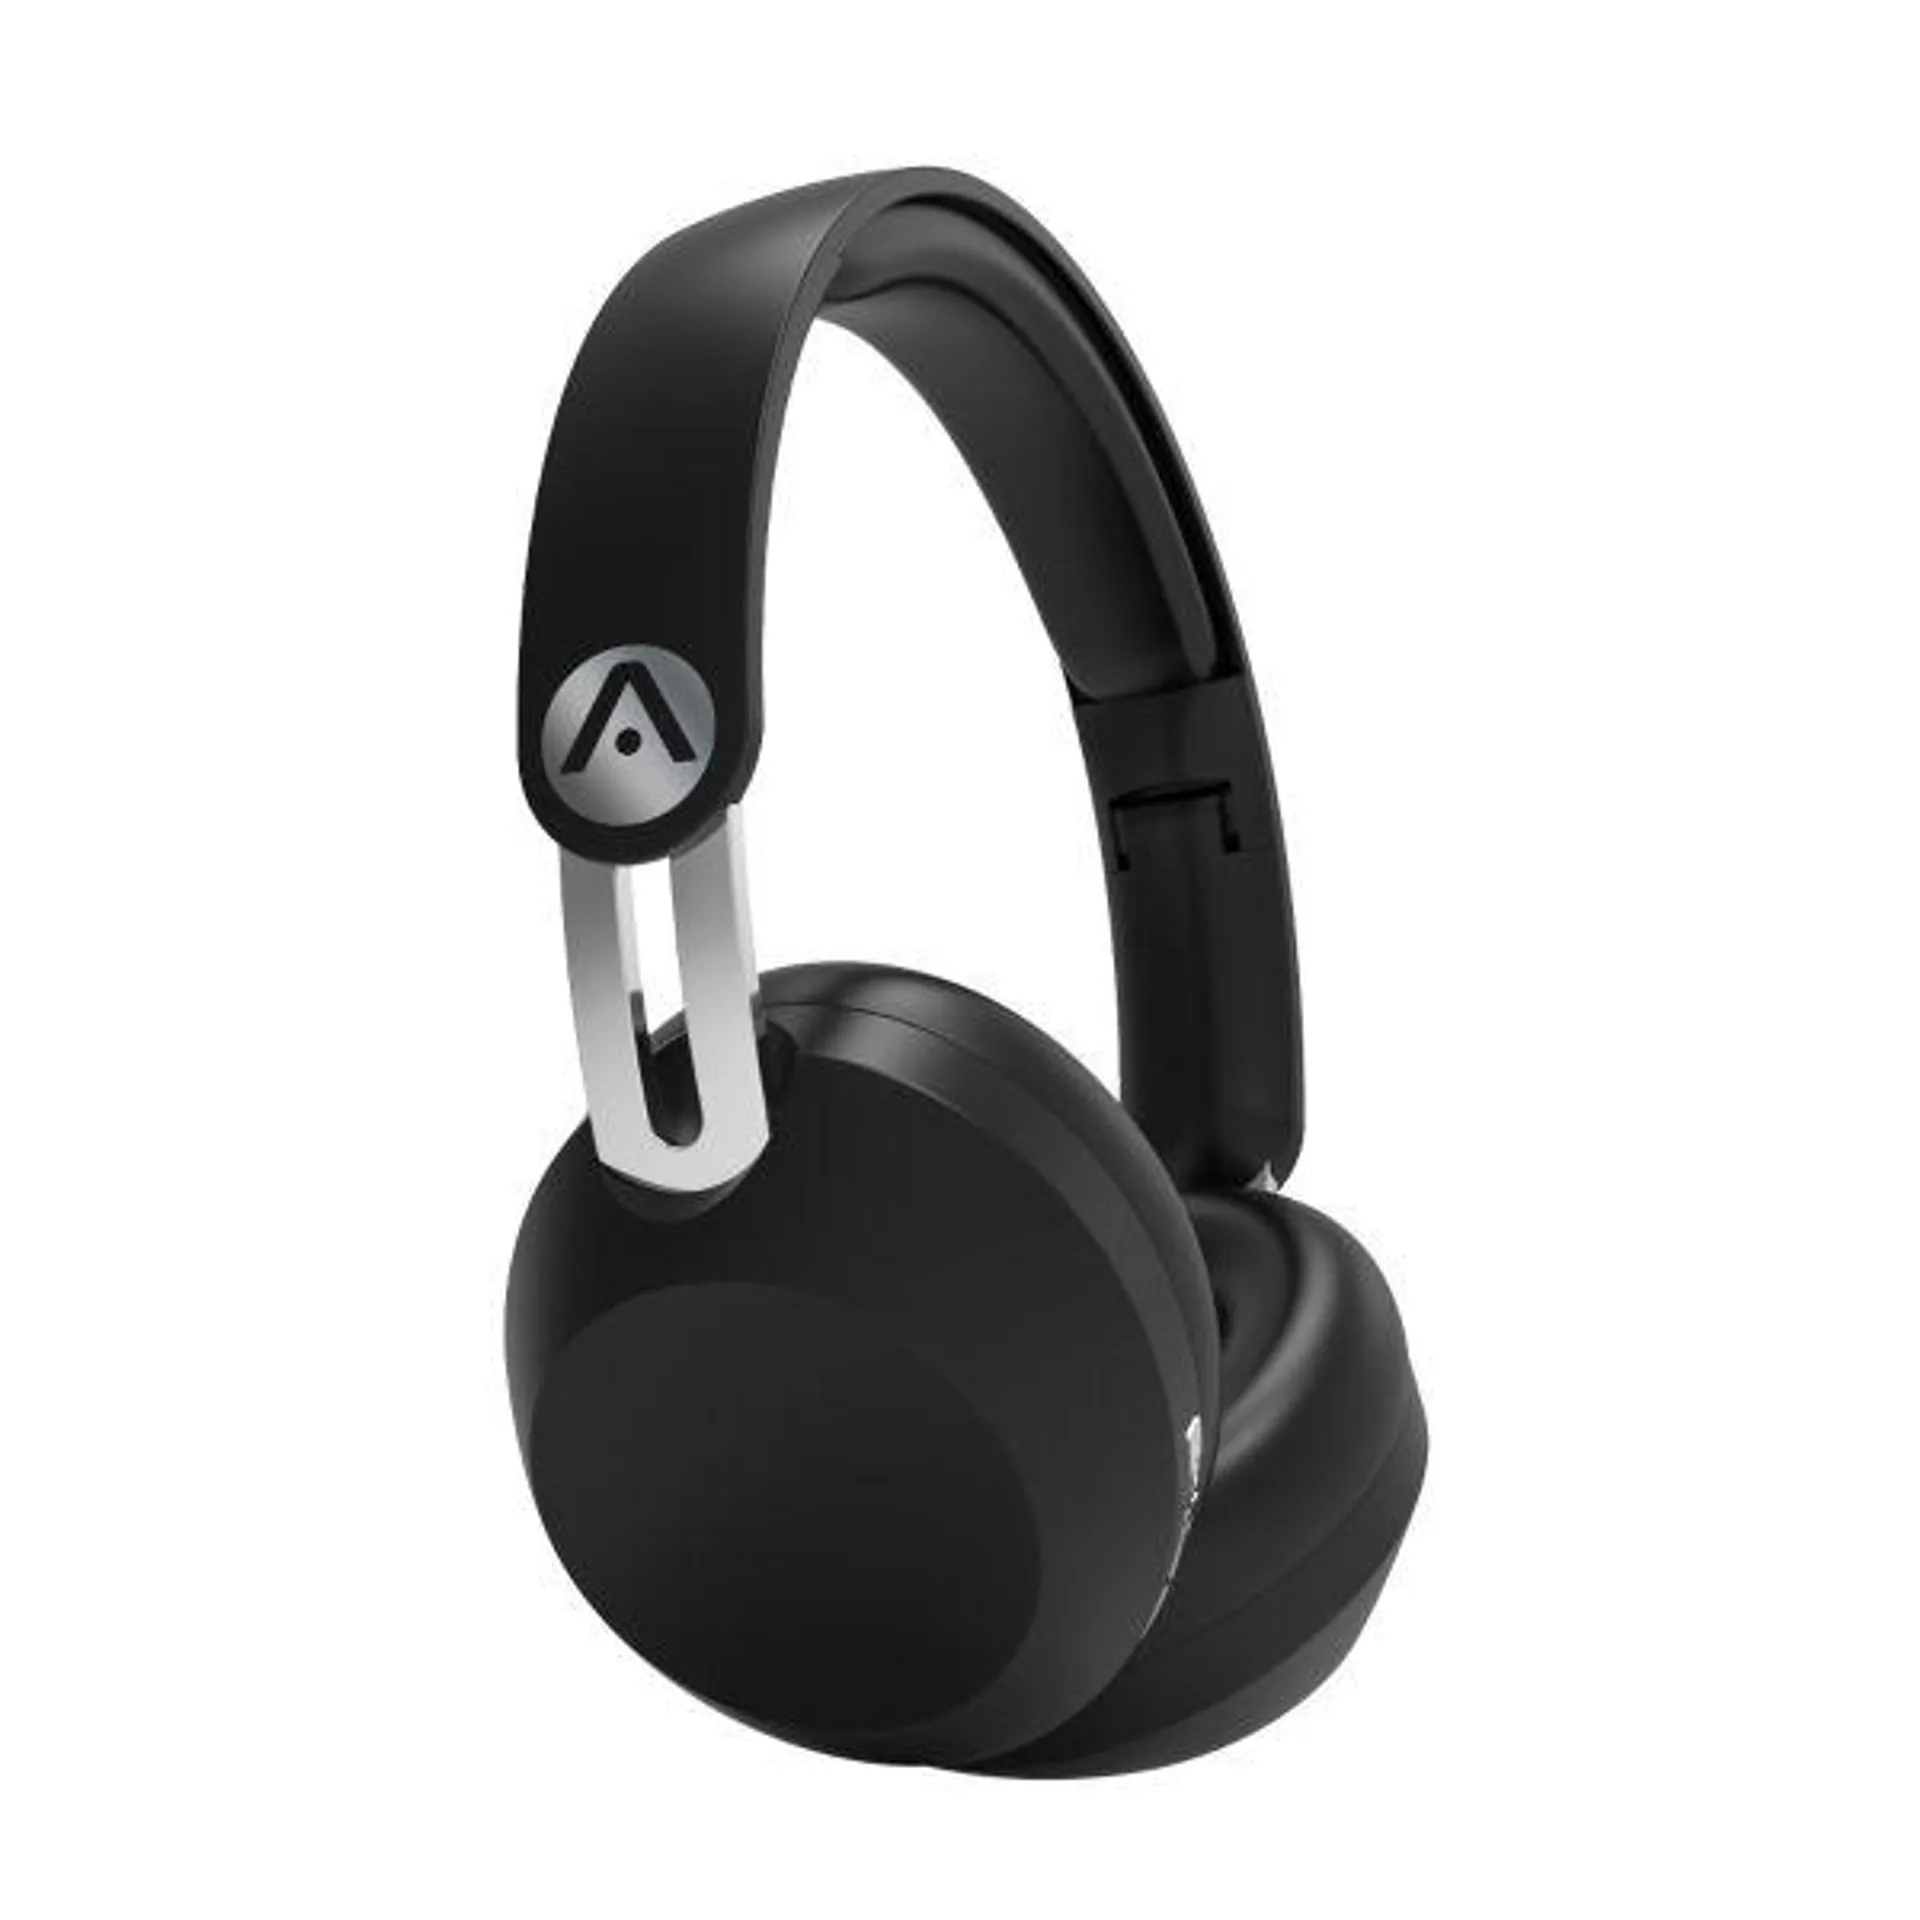 Audiomate Wireless Headphones - Silver